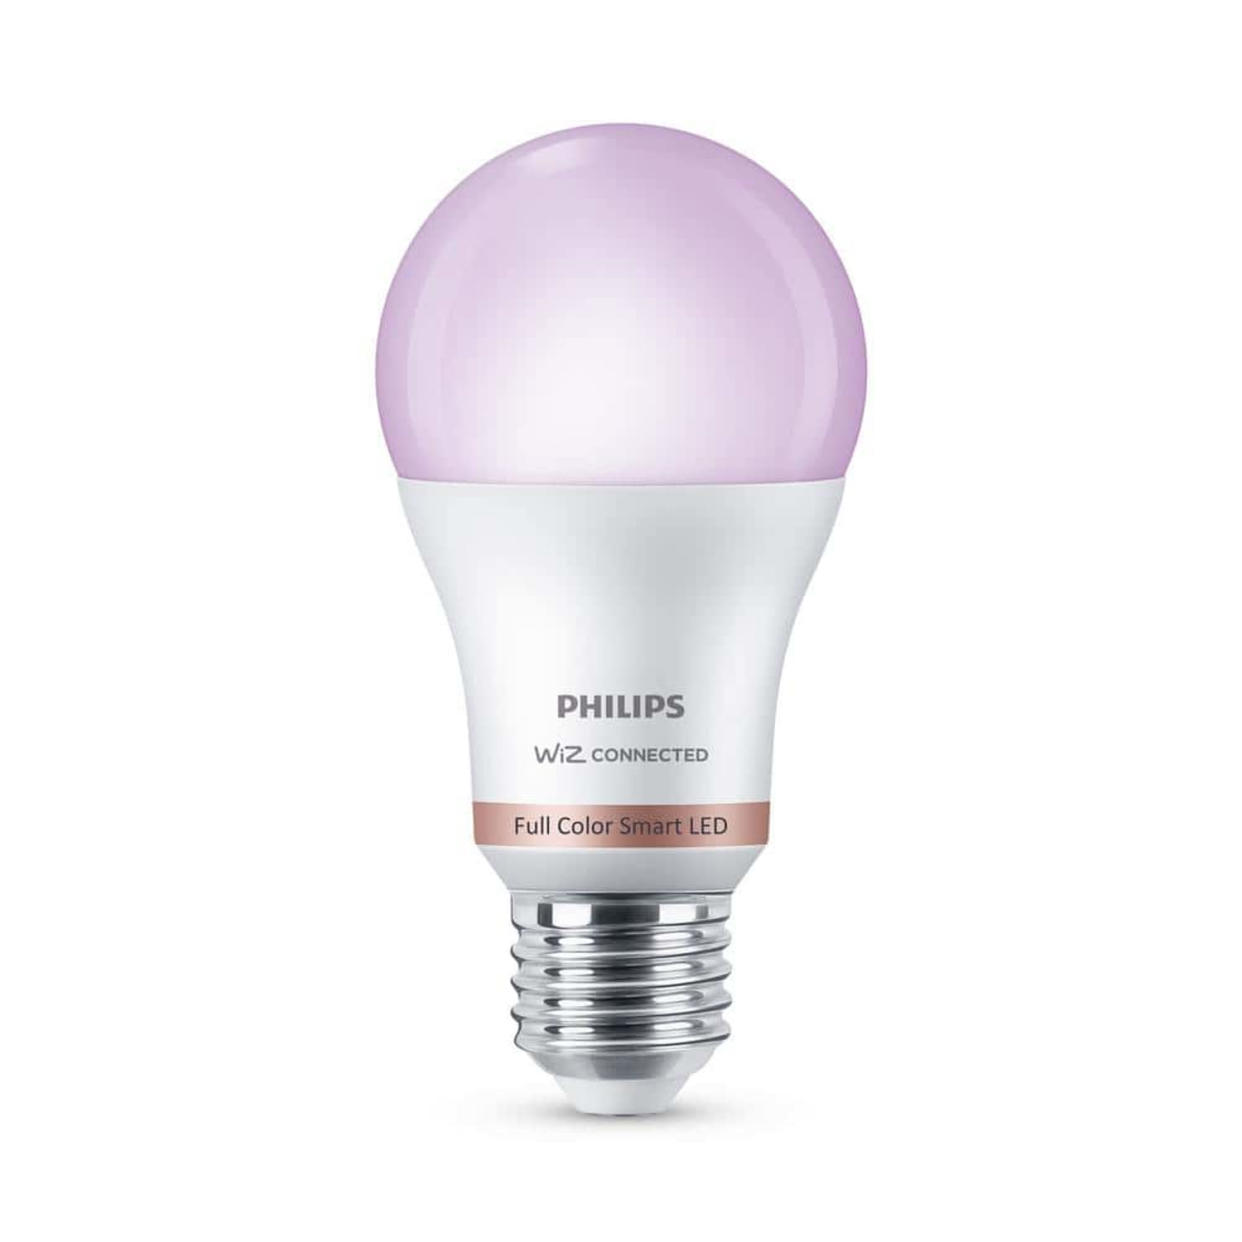 Philips Wiz Smart Wi-Fi LED Color Bulb (Home Depot / Home Depot)